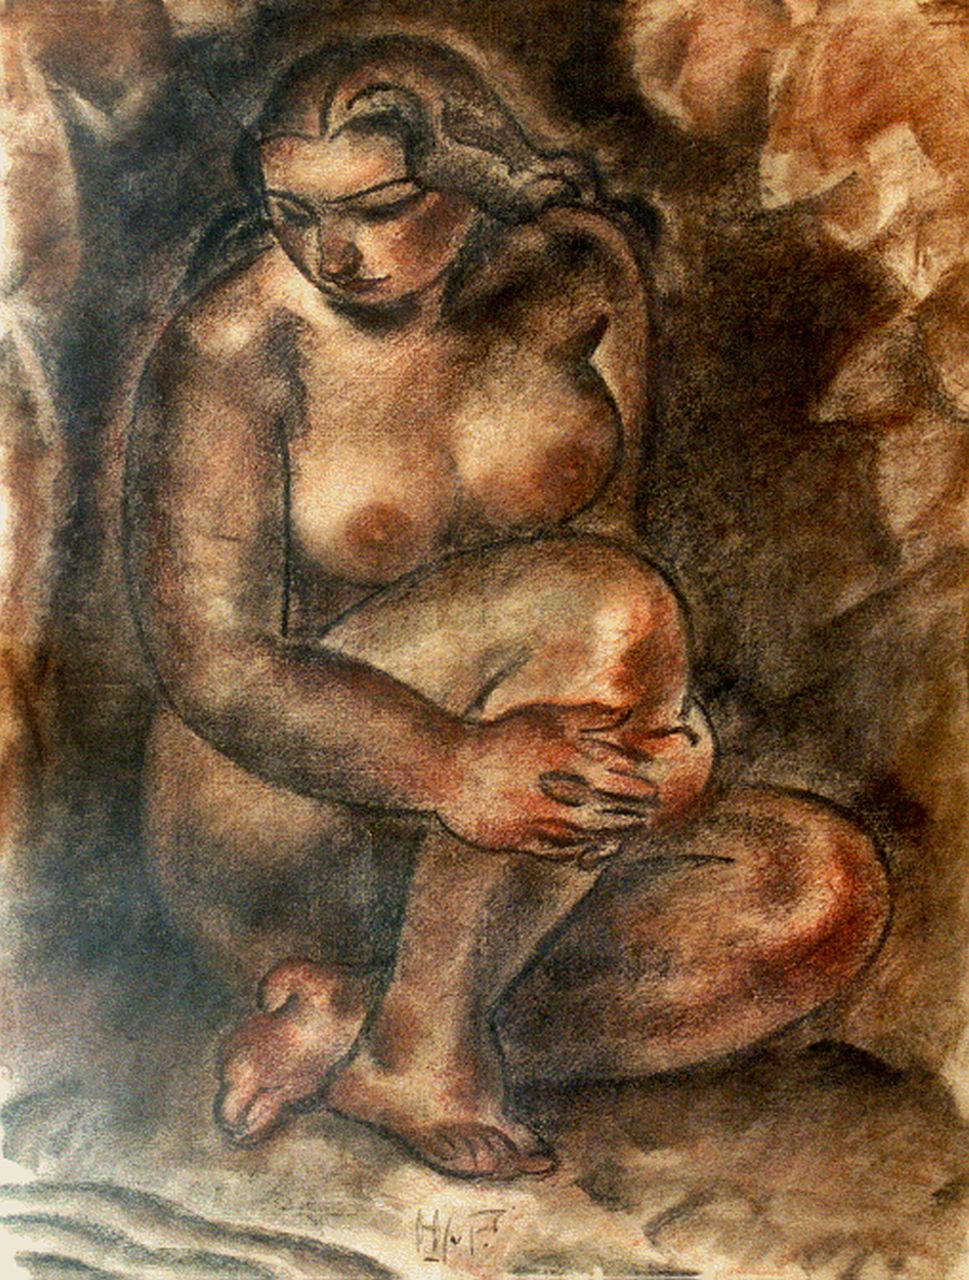 Piggelen H.J. van | H.J. van Piggelen, Seated nude, Pastell auf Papier 613,0 x 47,0 cm, signed l.m.